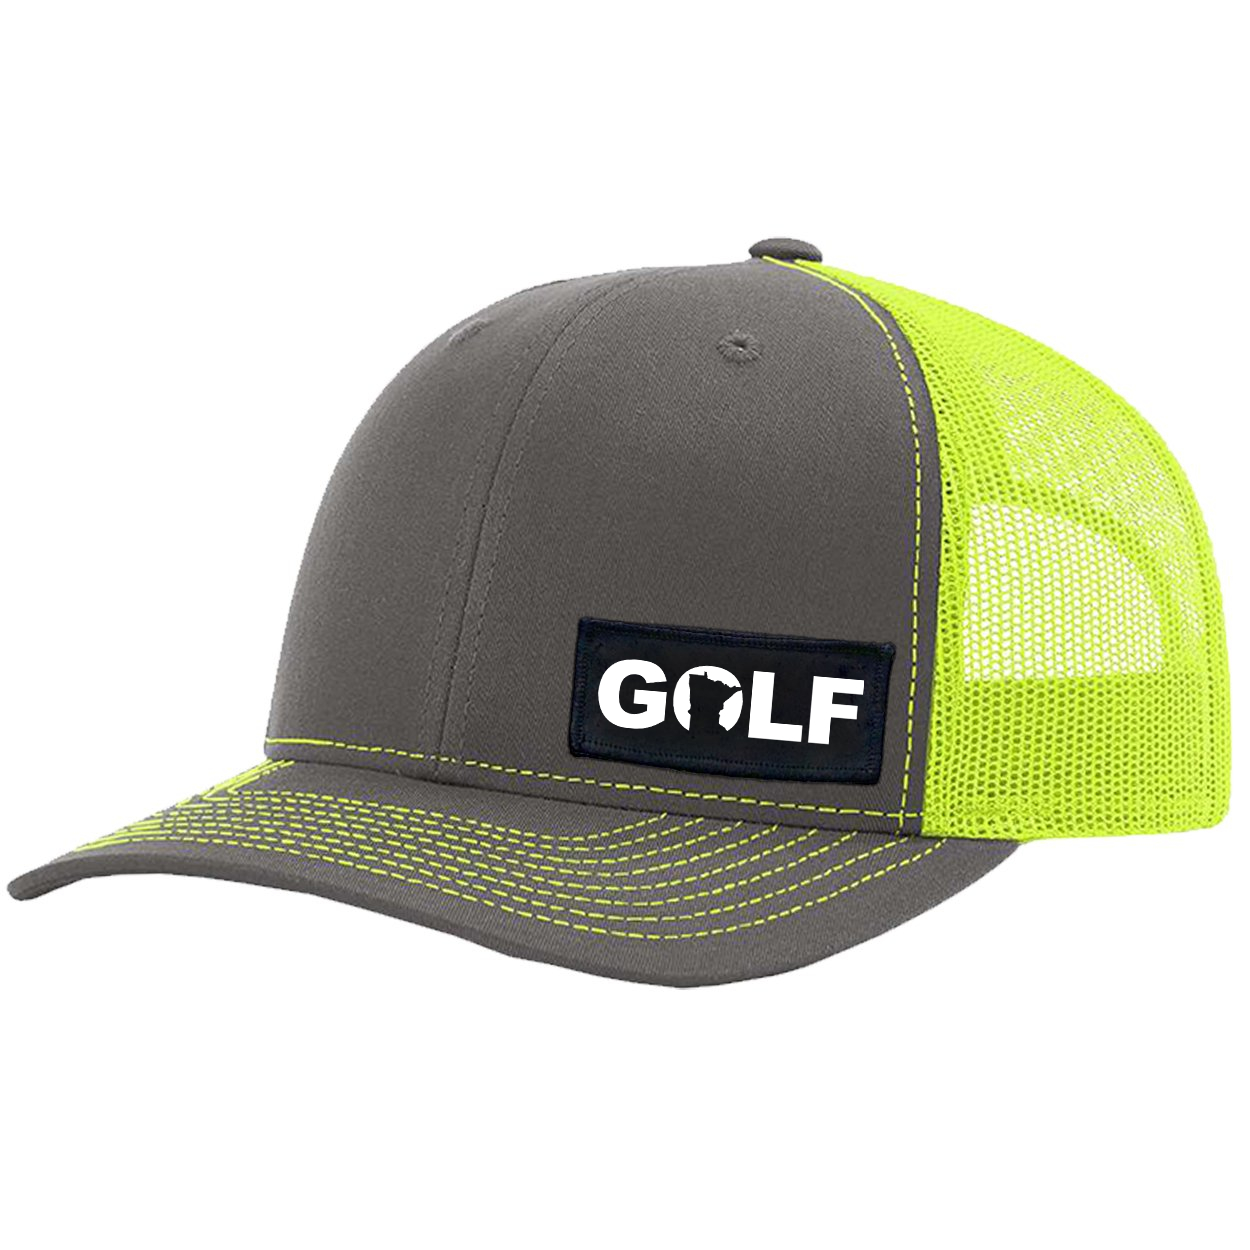 Golf Minnesota Night Out Woven Patch Snapback Trucker Hat Charcoal/Neon Yellow (White Logo)